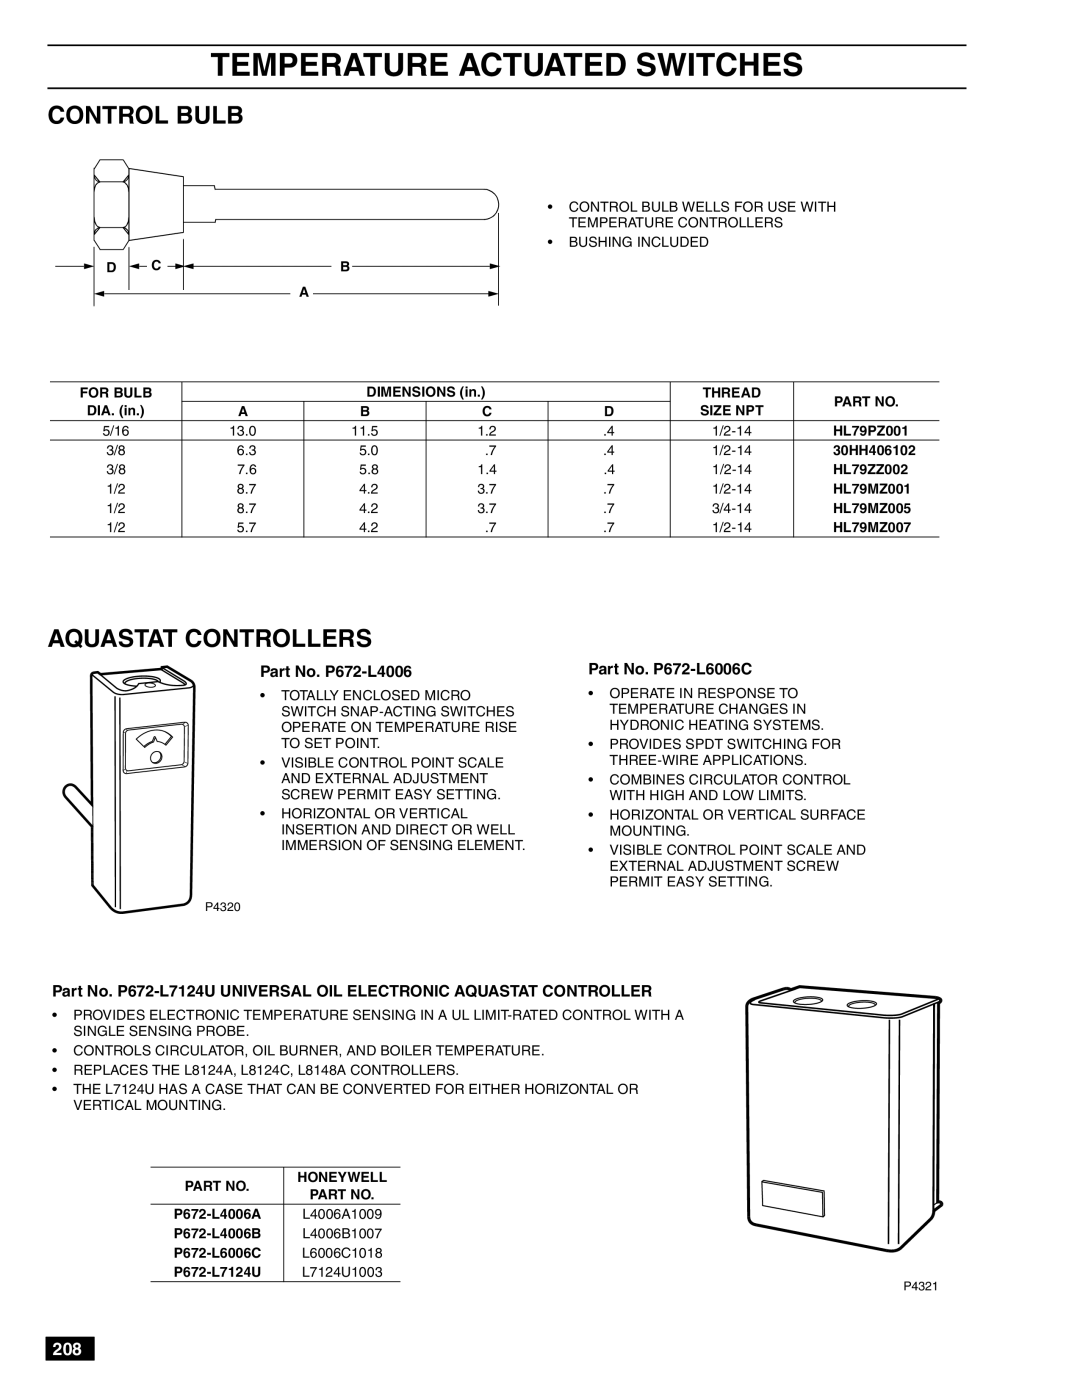 White Rodgers 1F56-301, 1E56-444 Temperature Actuated Switches, Control Bulb, Aquastat Controllers, Part No. P672-L4006 